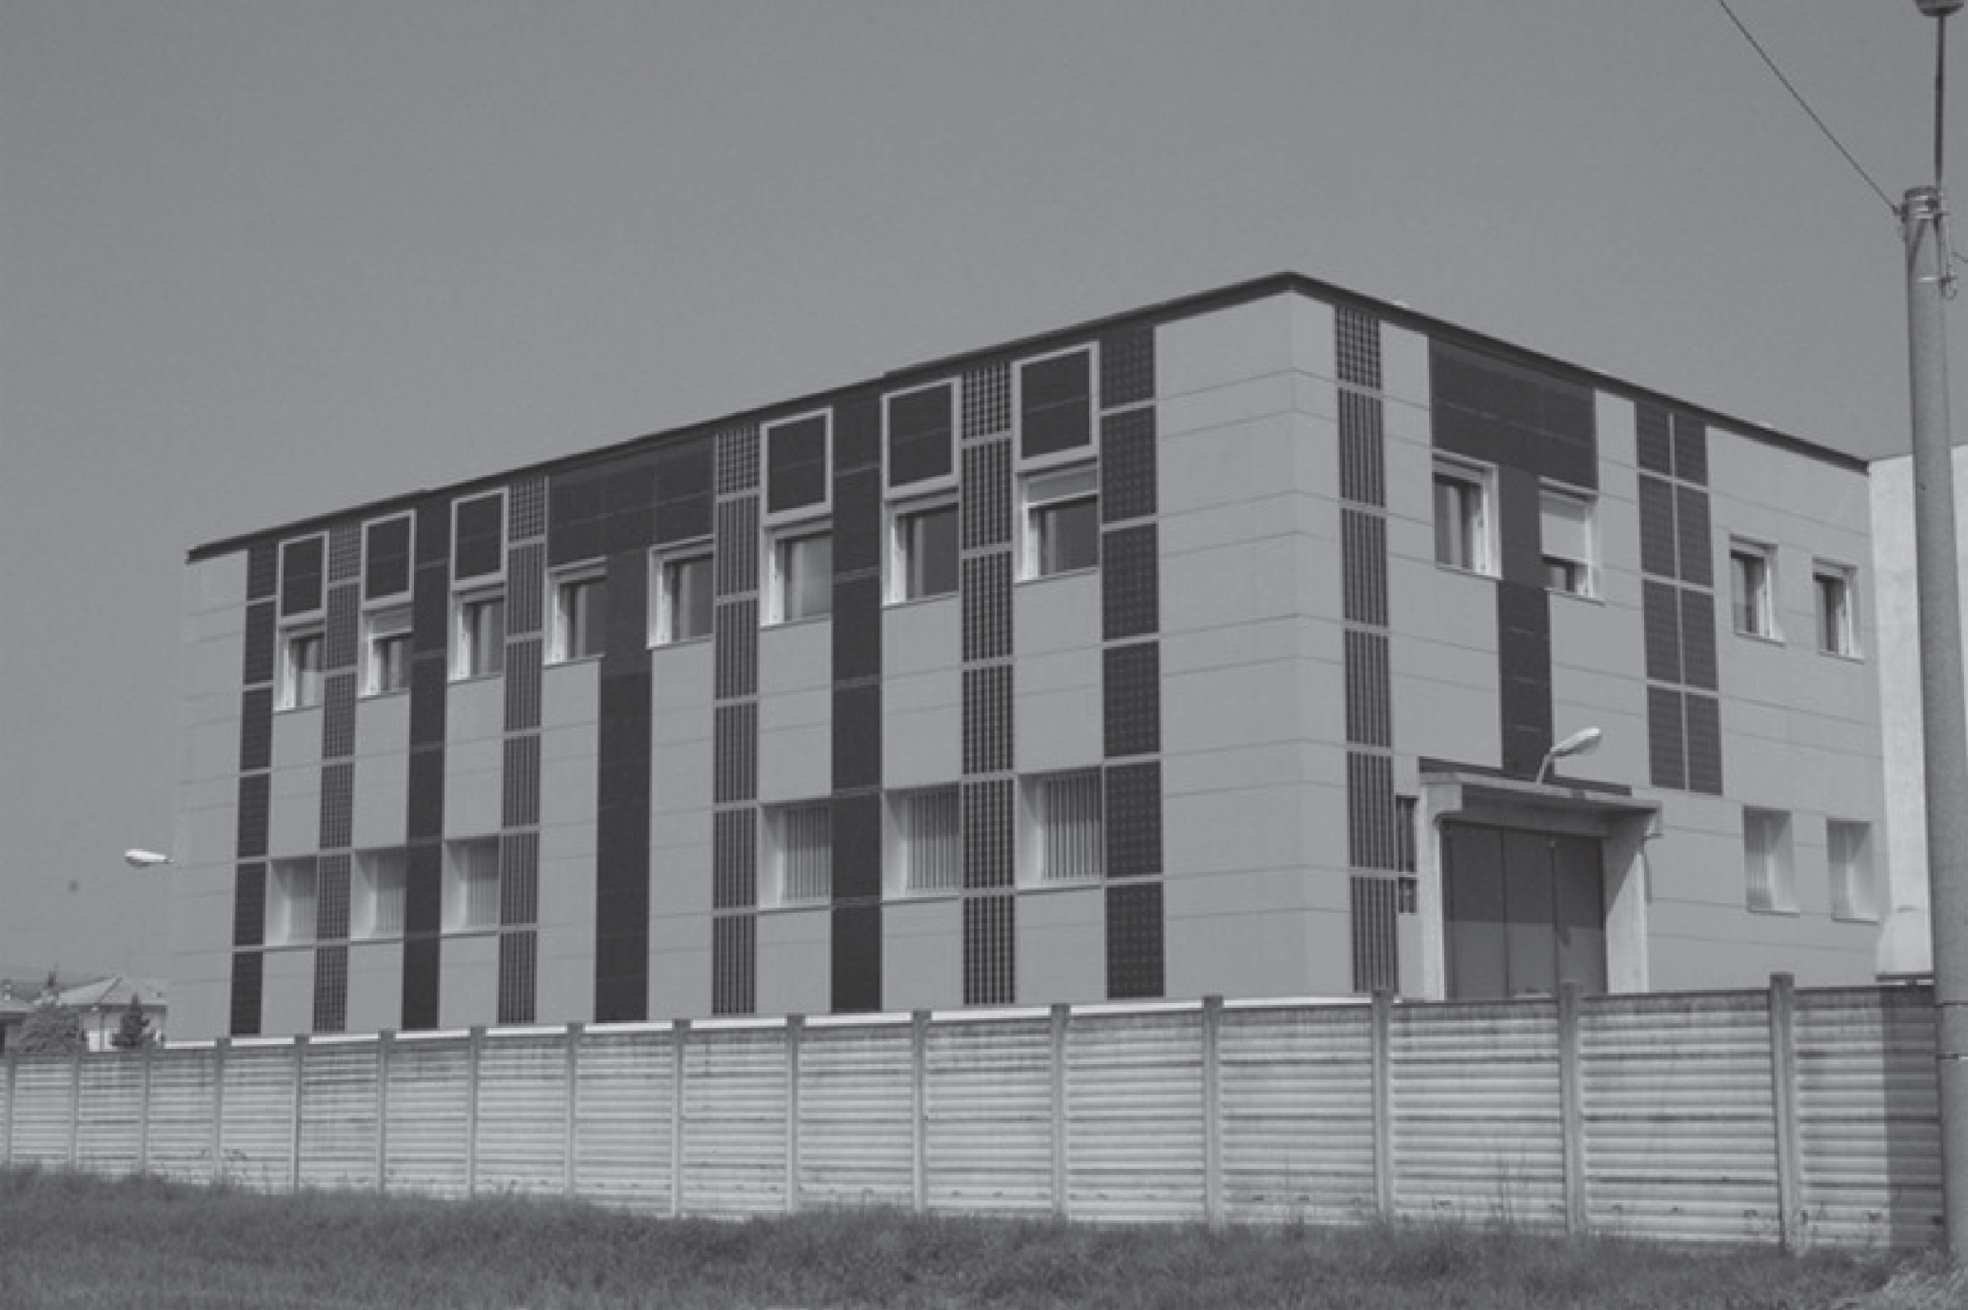 View of the case study building. Source: www.edilportale.com.